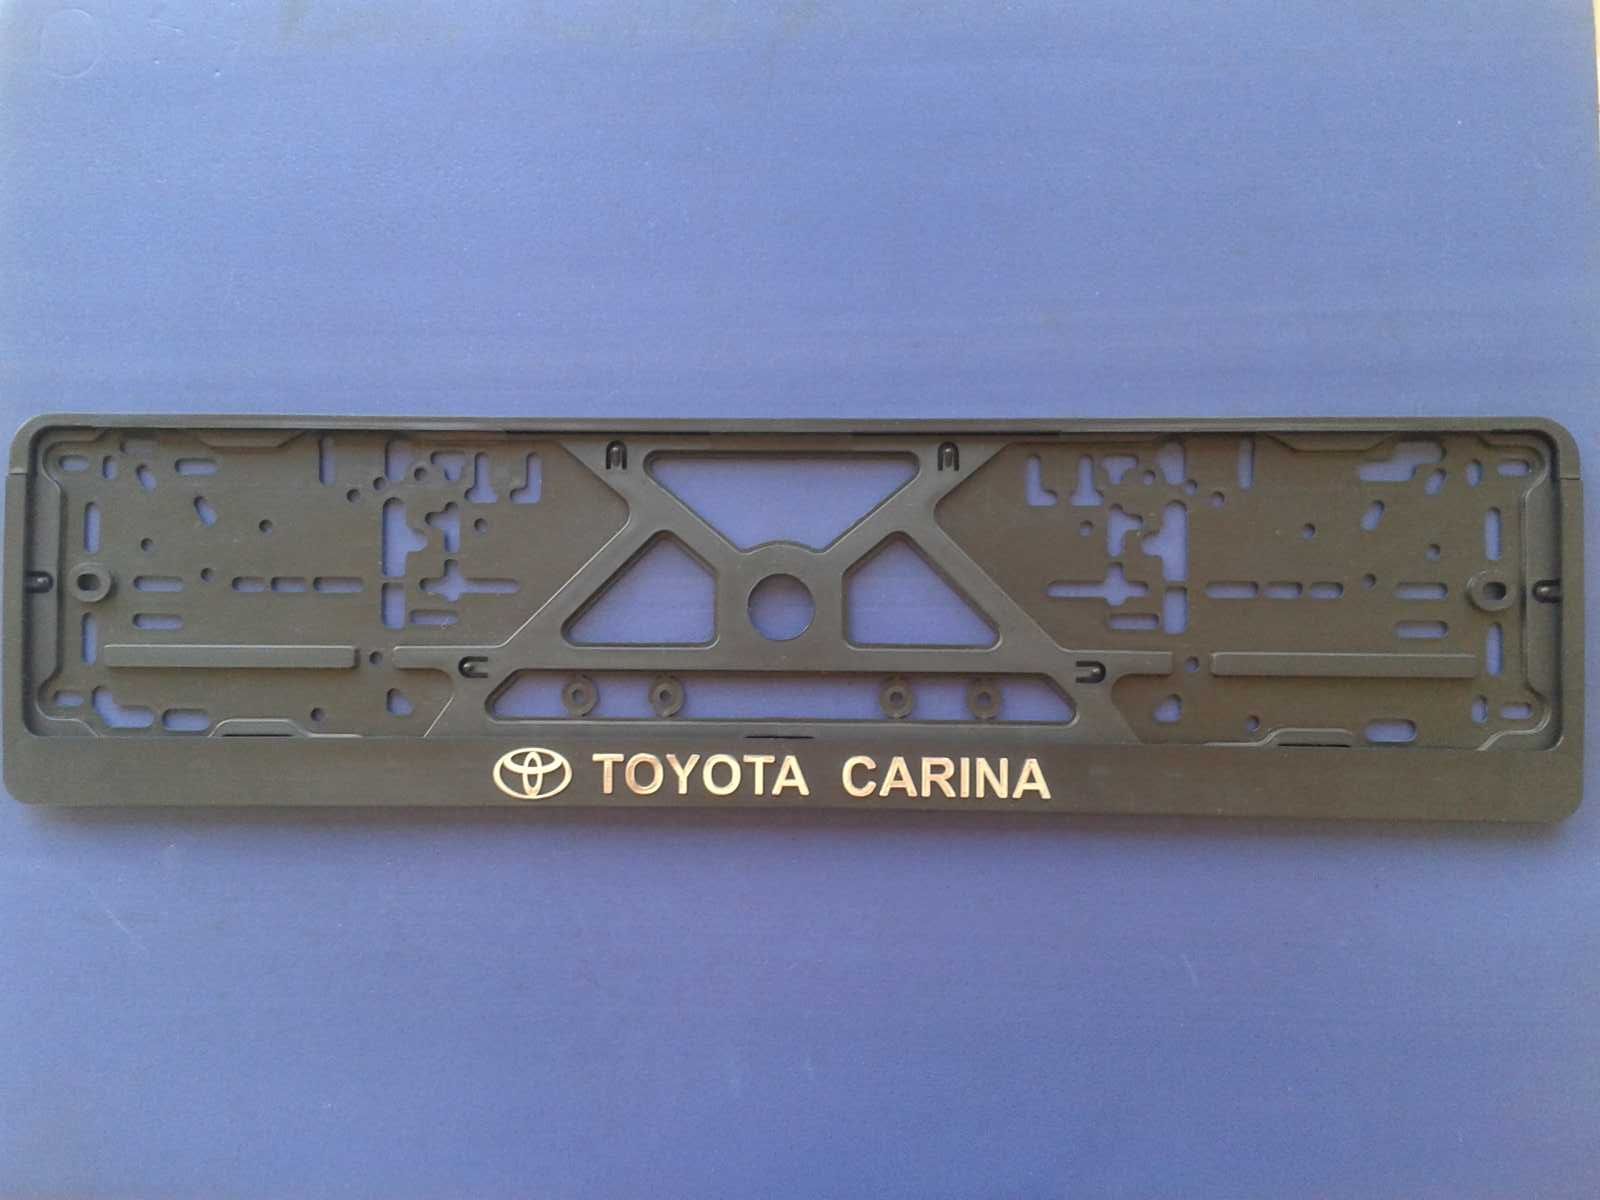 Рамка держатель Toyota Carina хром Avensis серебро подномерник